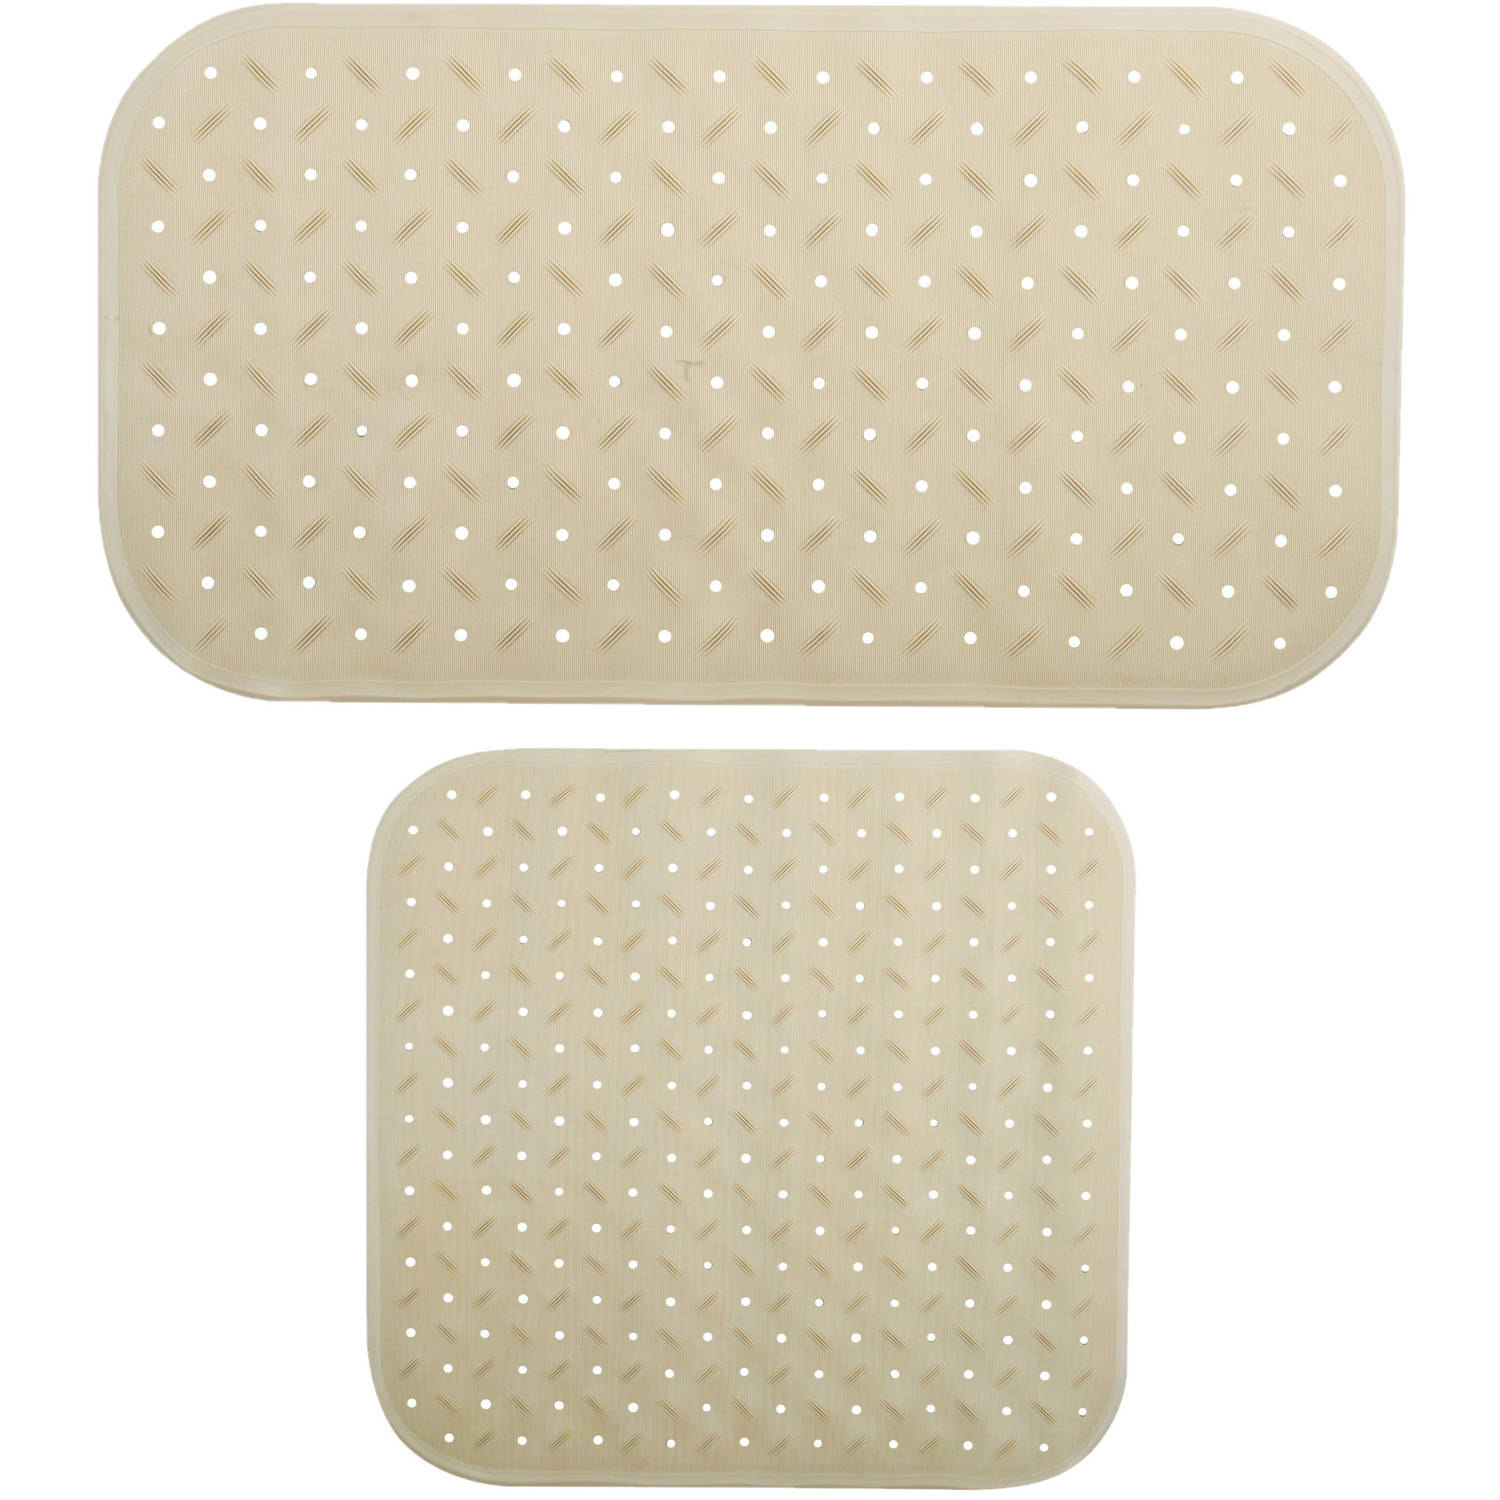 MSV Douche-bad anti-slip matten set badkamer rubber 2x stuks beige 2 formaten Badmatjes